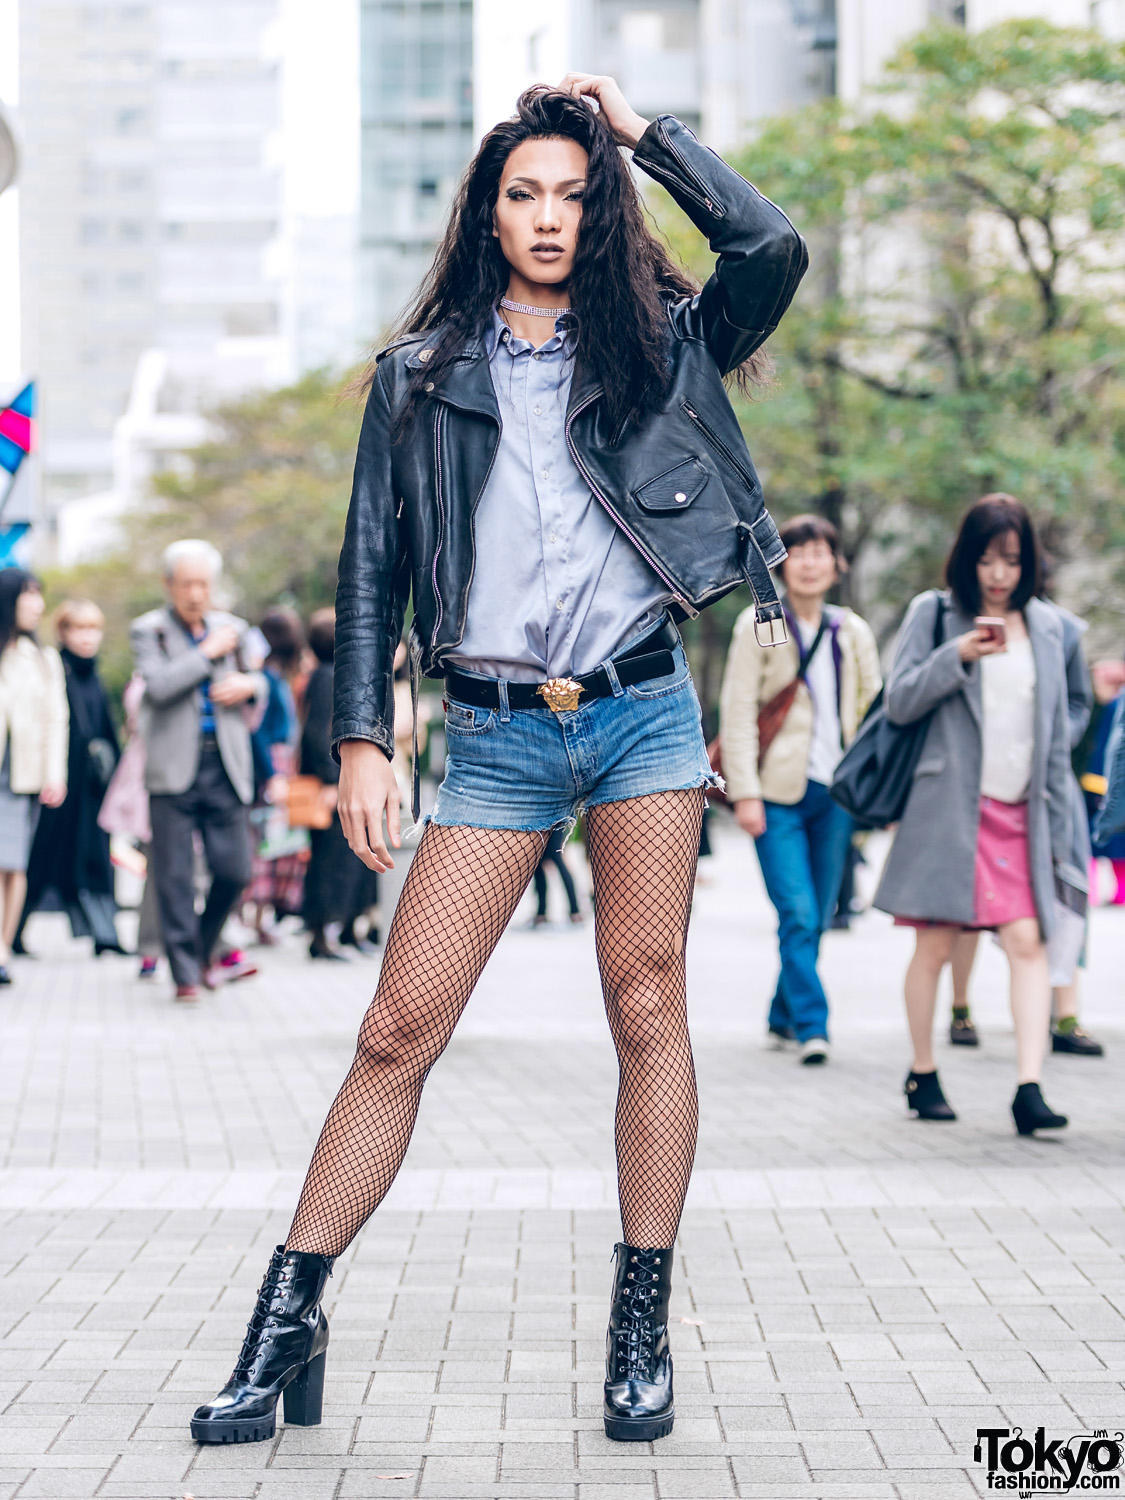 Beauty Student w/ Black Leather Jacket, Jean Shorts, Fishnet Stockings &  Heeled Boots – Tokyo Fashion